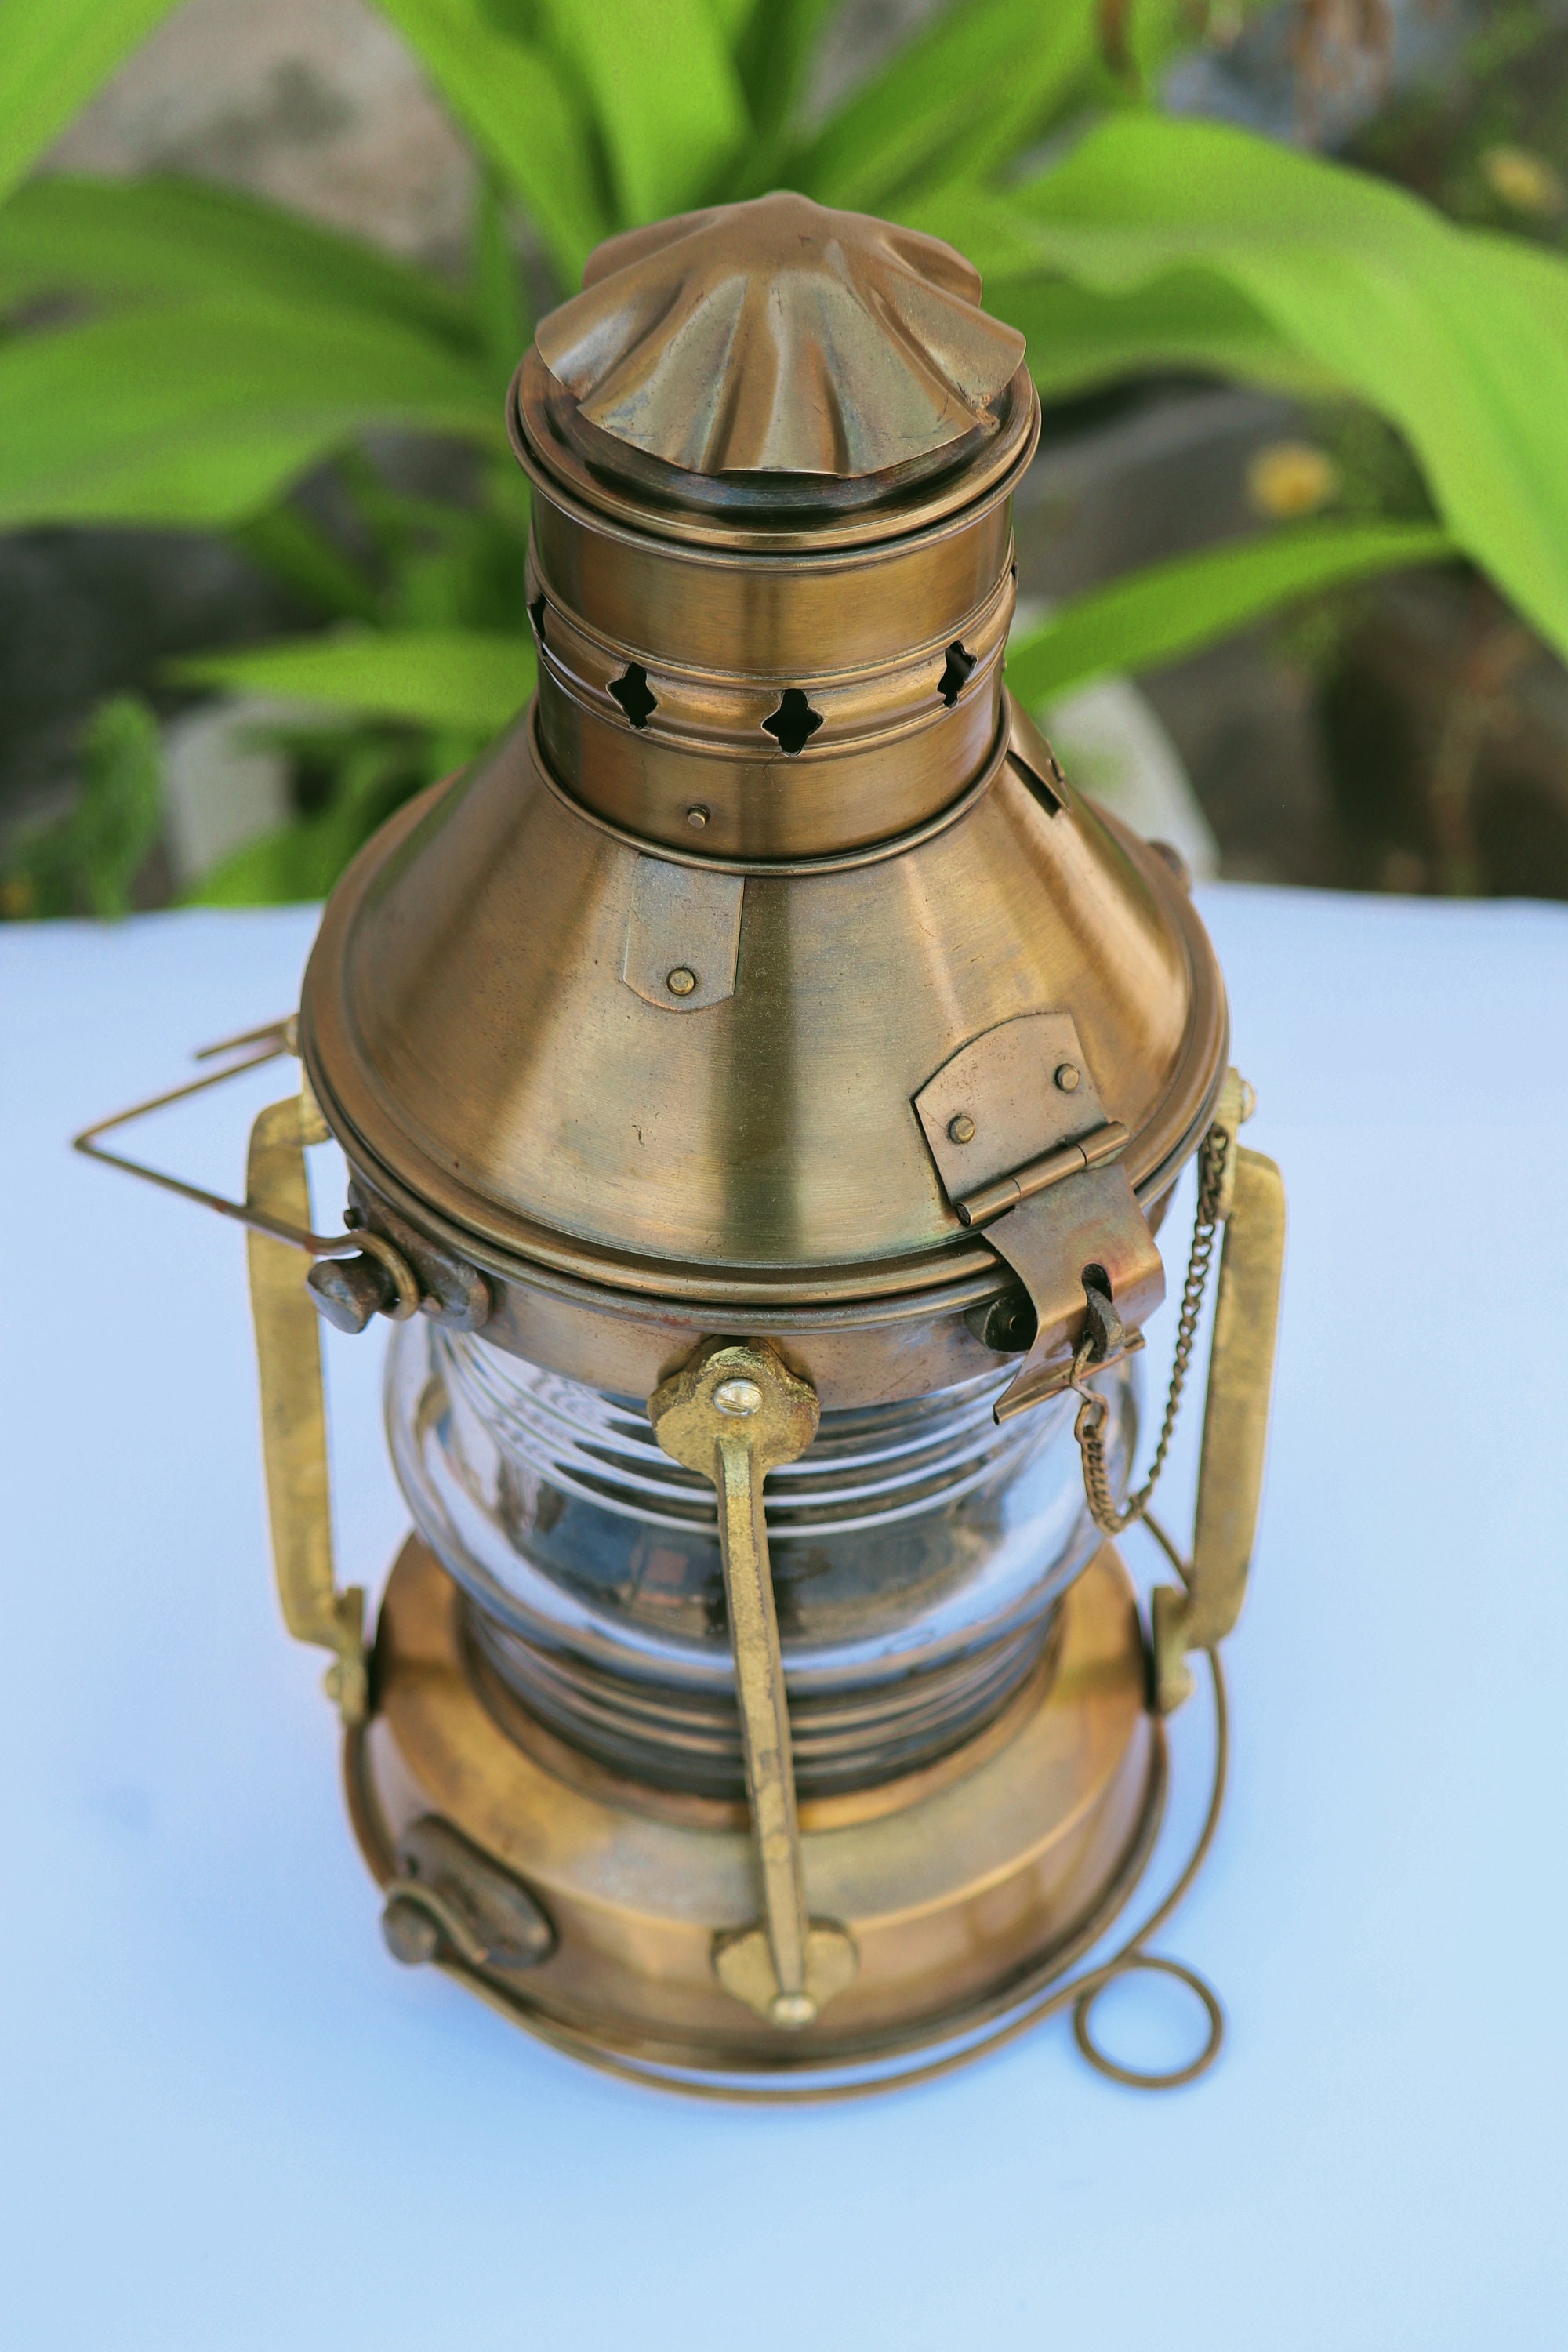 14 Brass Anchor Oil Lamp w/ Clear Fresnel Lens - Ship Lantern